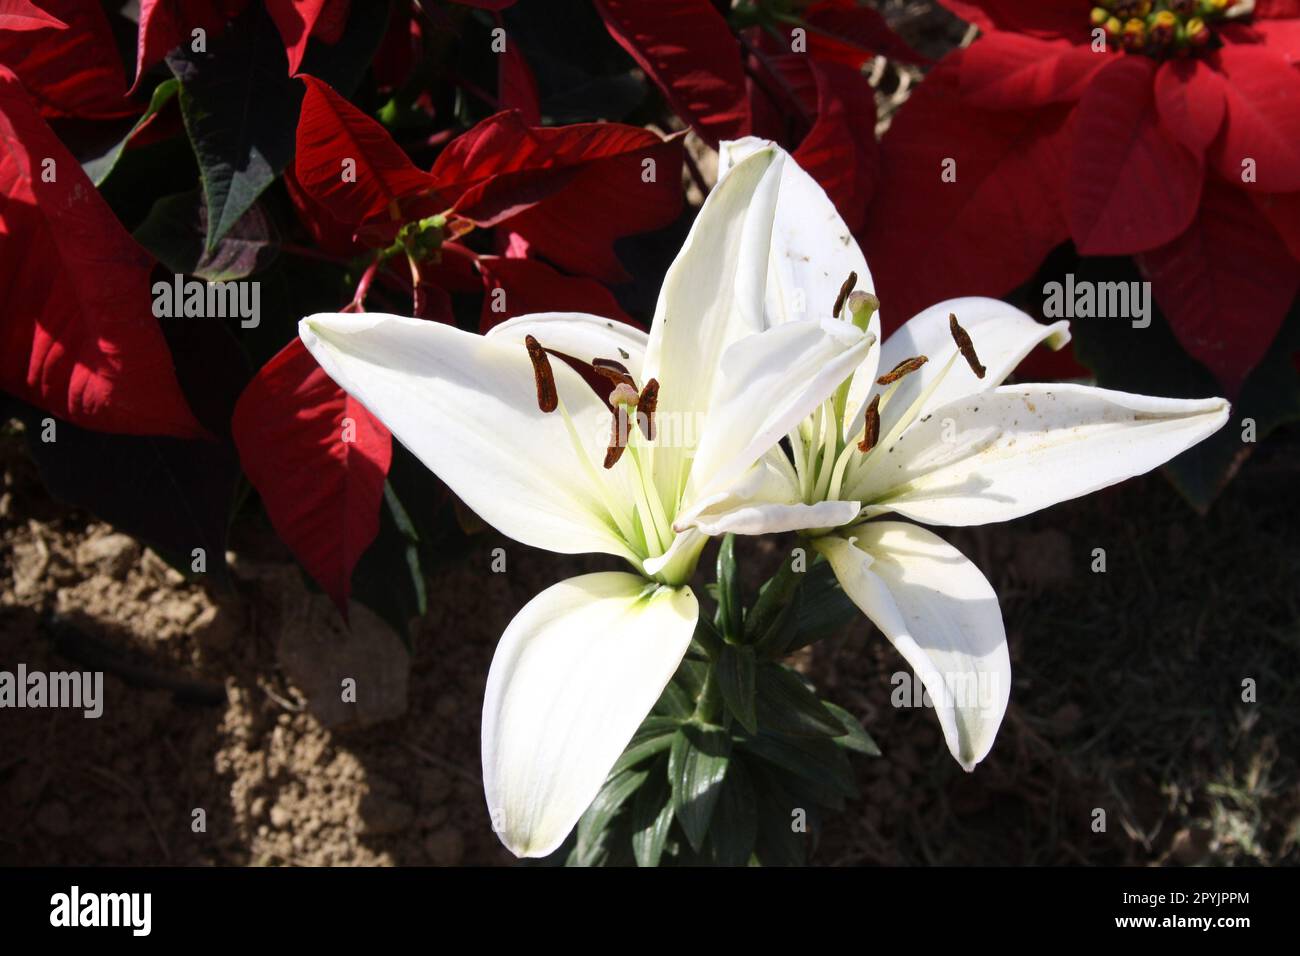 White Lilium 'Navona' (Lilium auratum) flowers with crimson anthers : (pix Sanjiv Shukla) Stock Photo